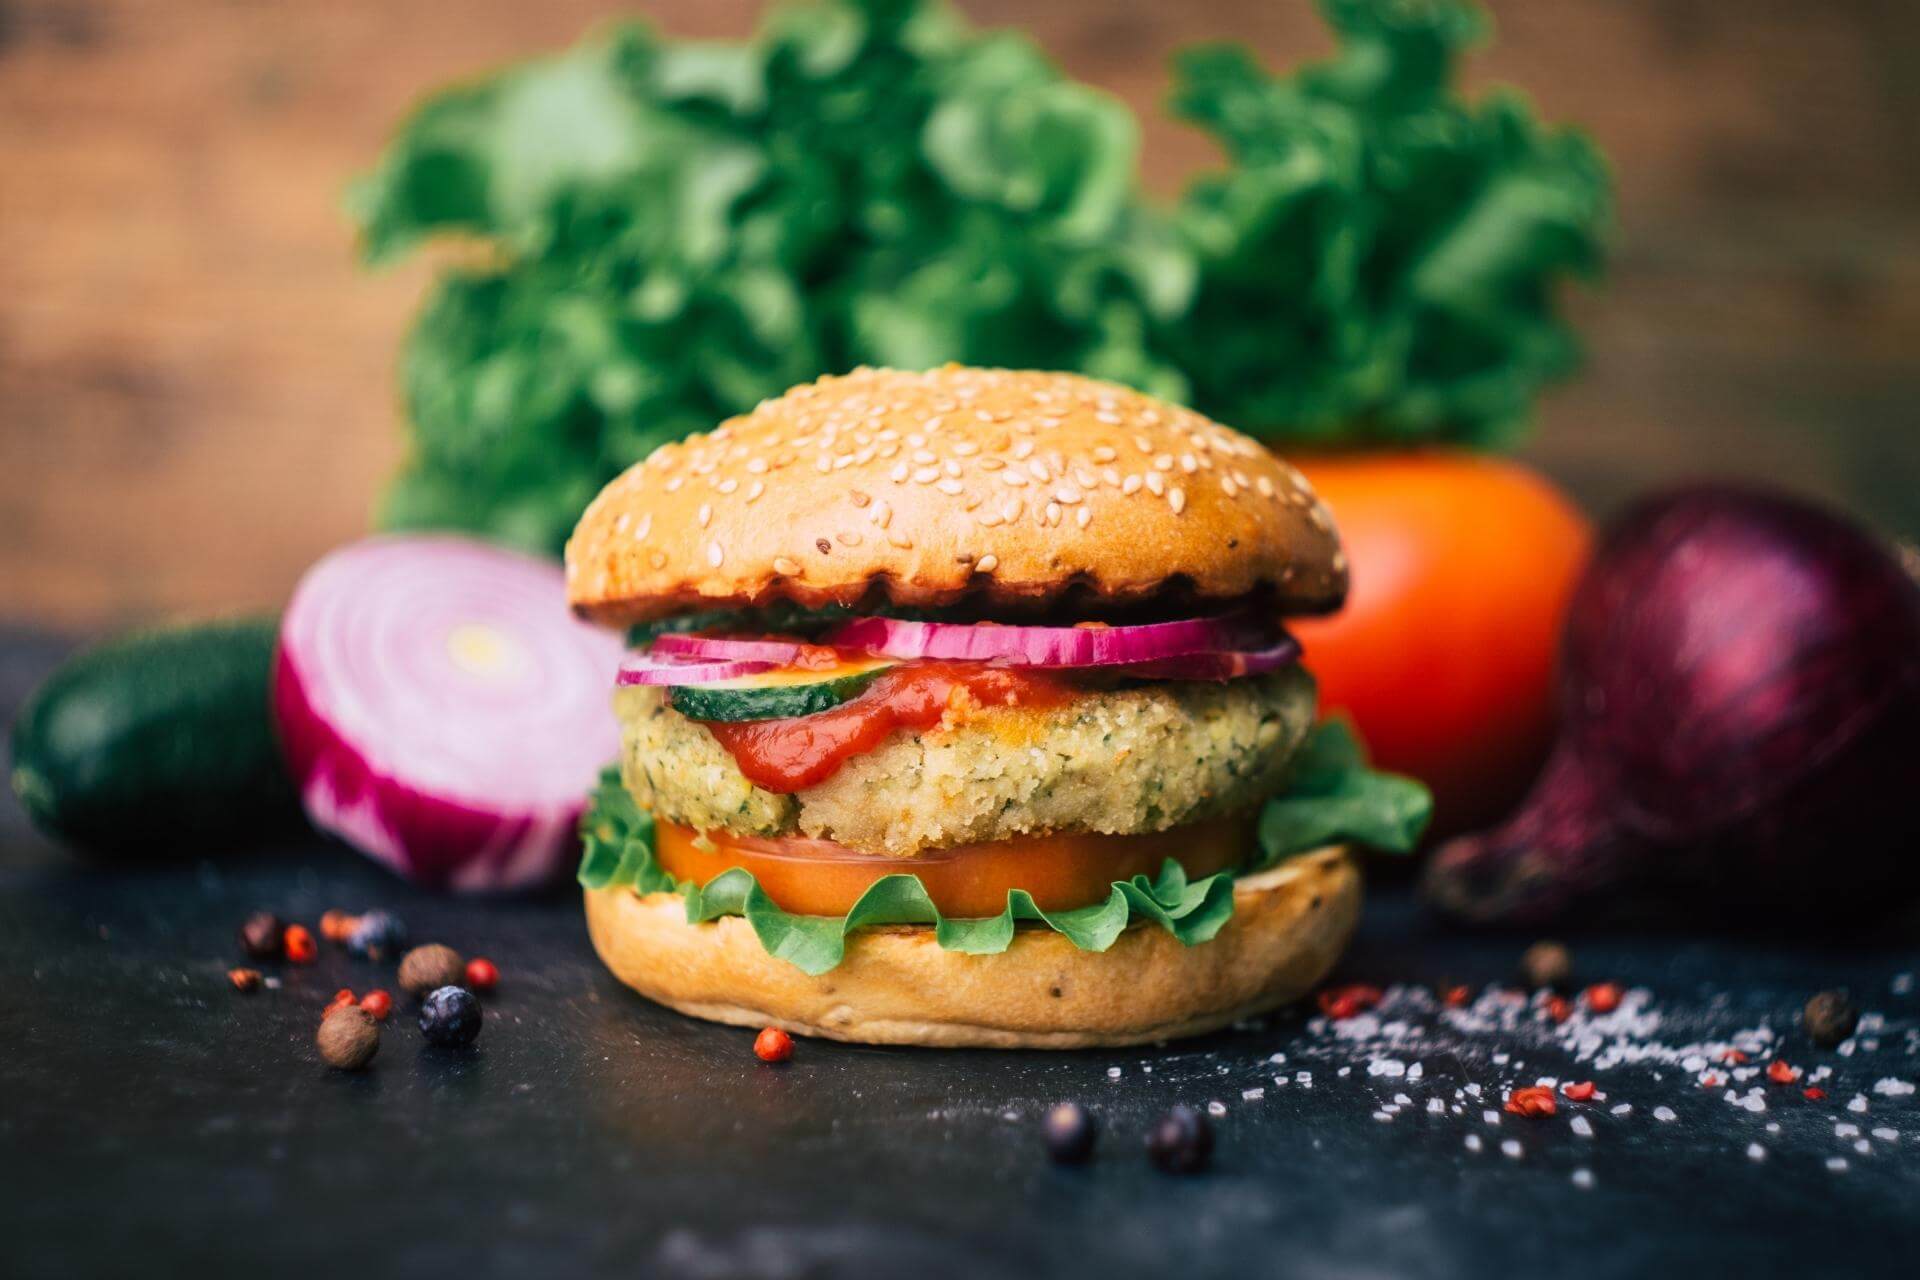 hamburger vegano: cibi vegetali alternativi alla carne